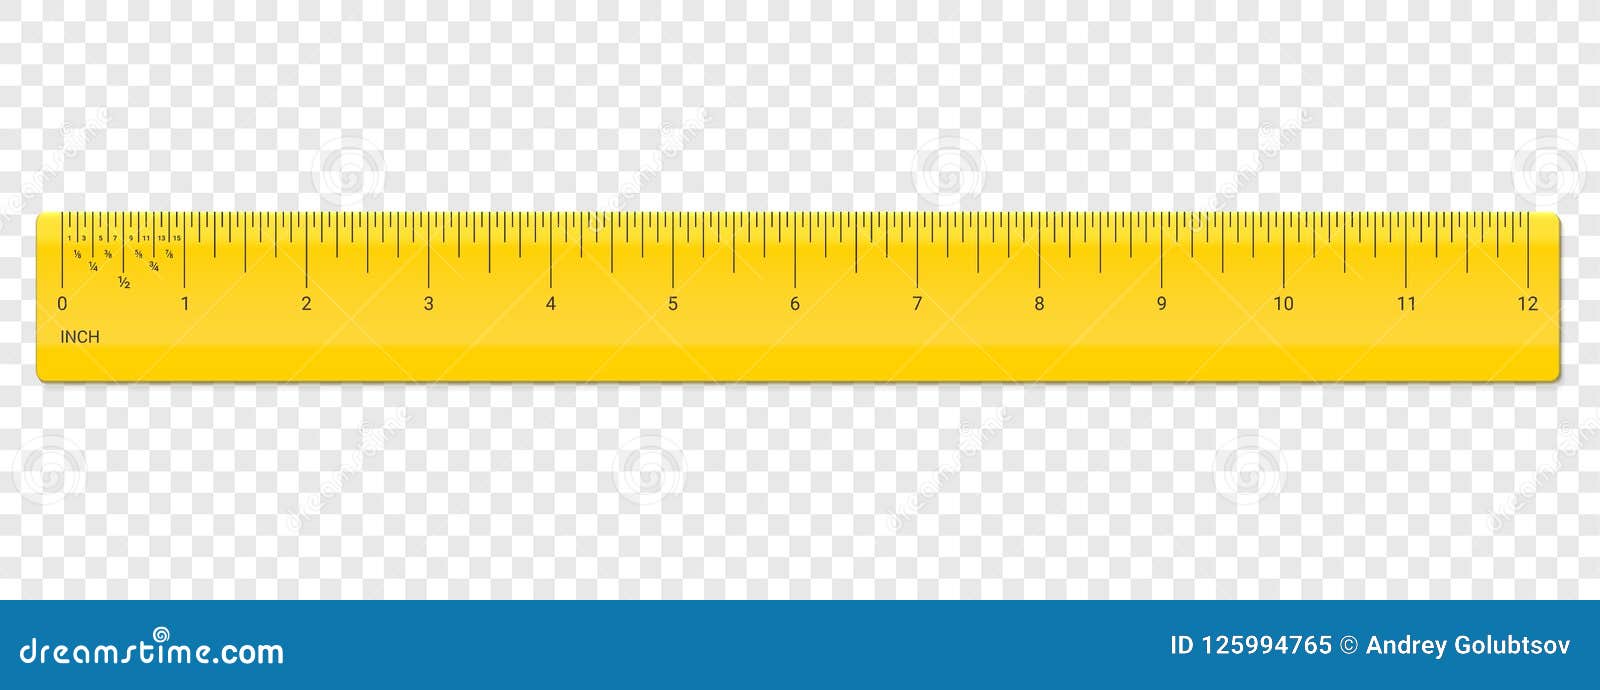 ruler inch scale  plastic measurement